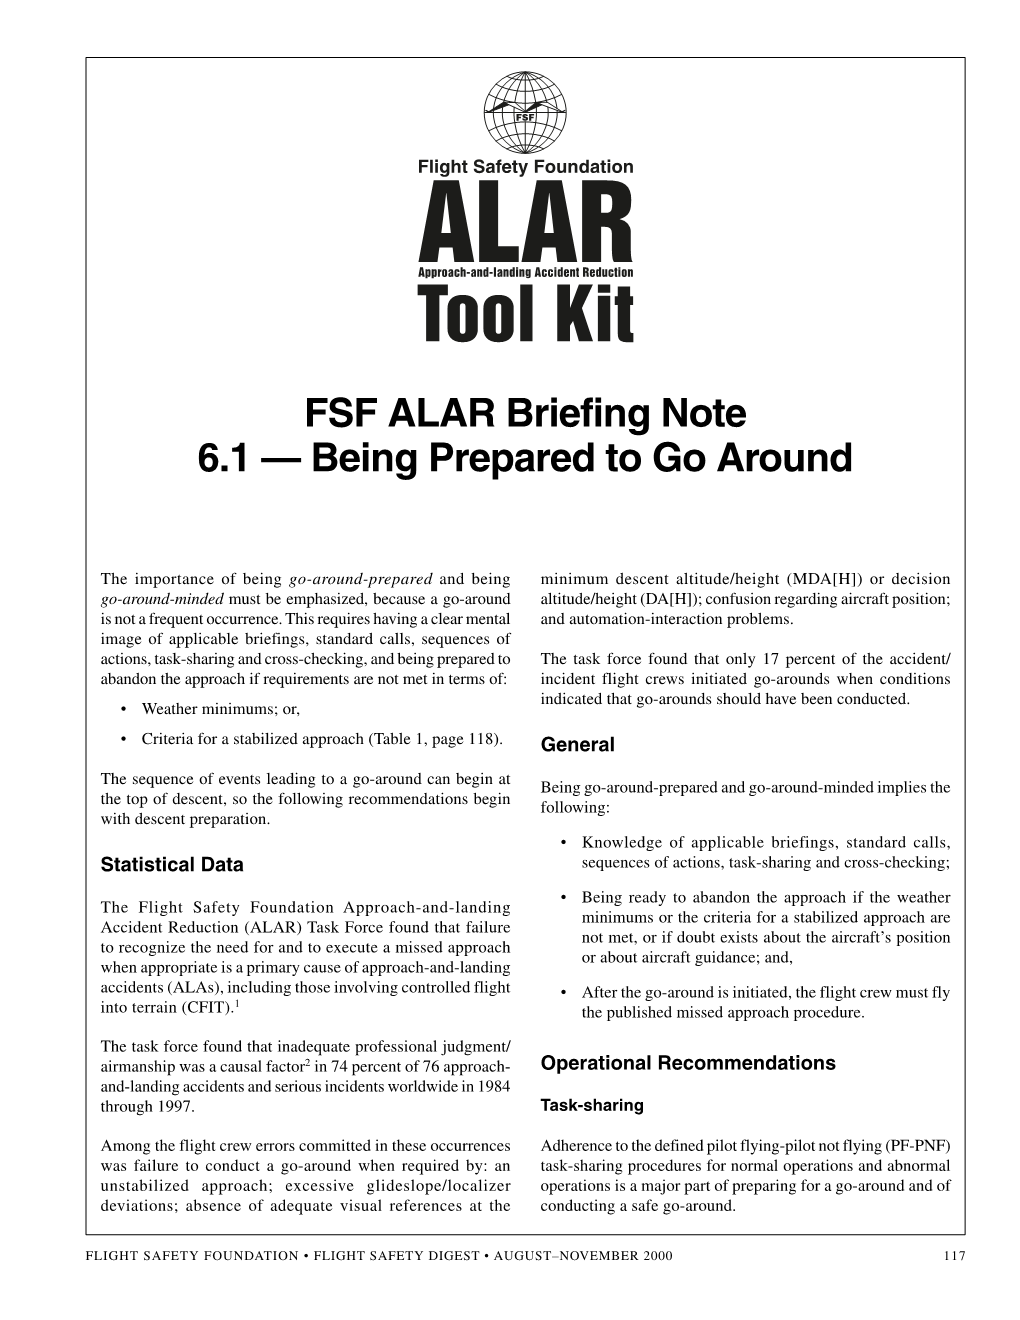 FSF ALAR Briefing Note 6.1 -- Being Prepared to Go Around